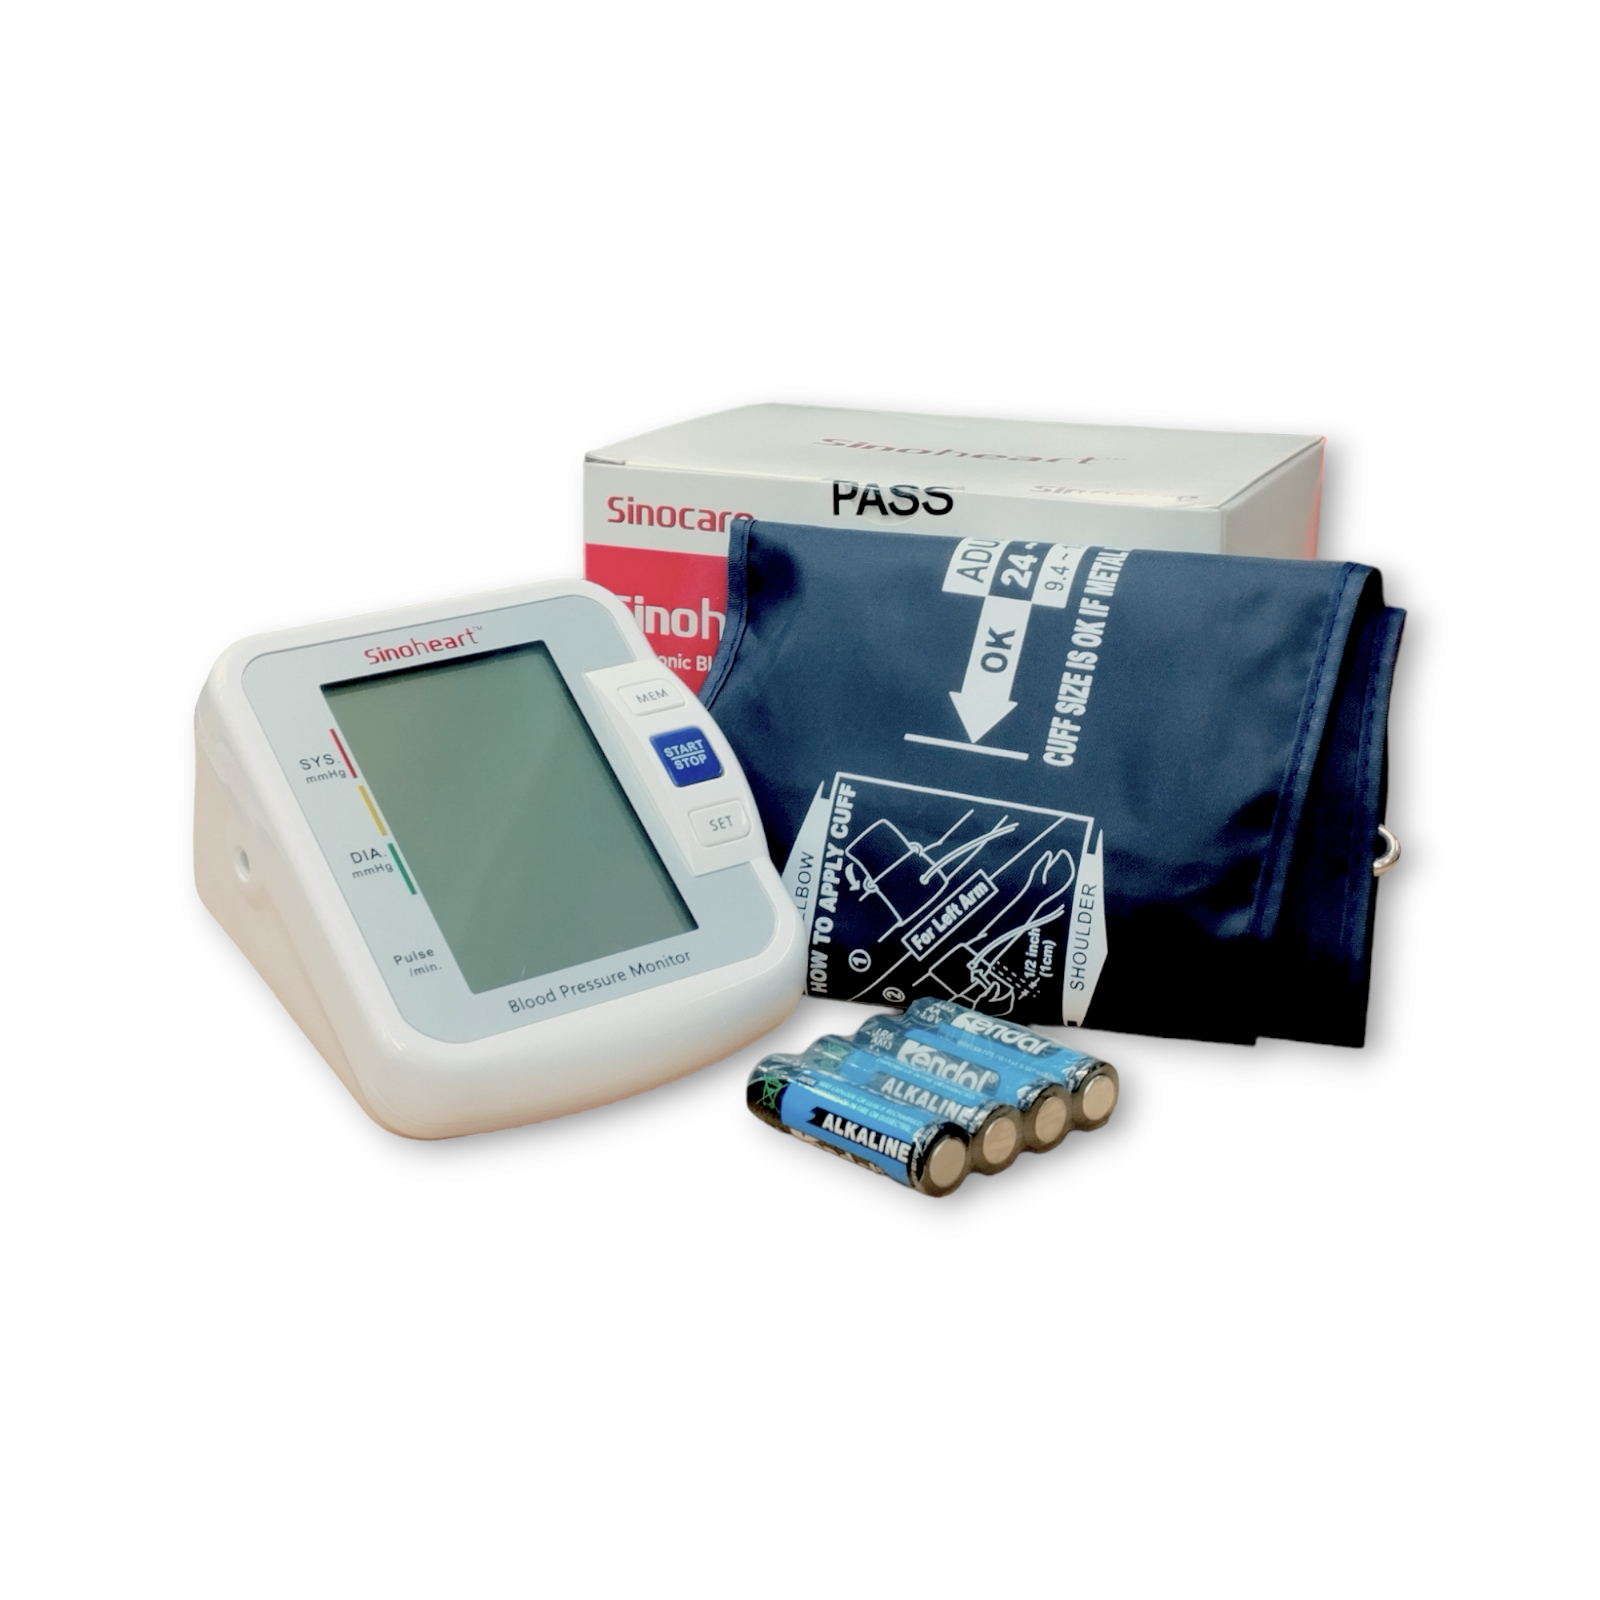 Sinoheart BA-801 Digital Blood Pressure Monitor